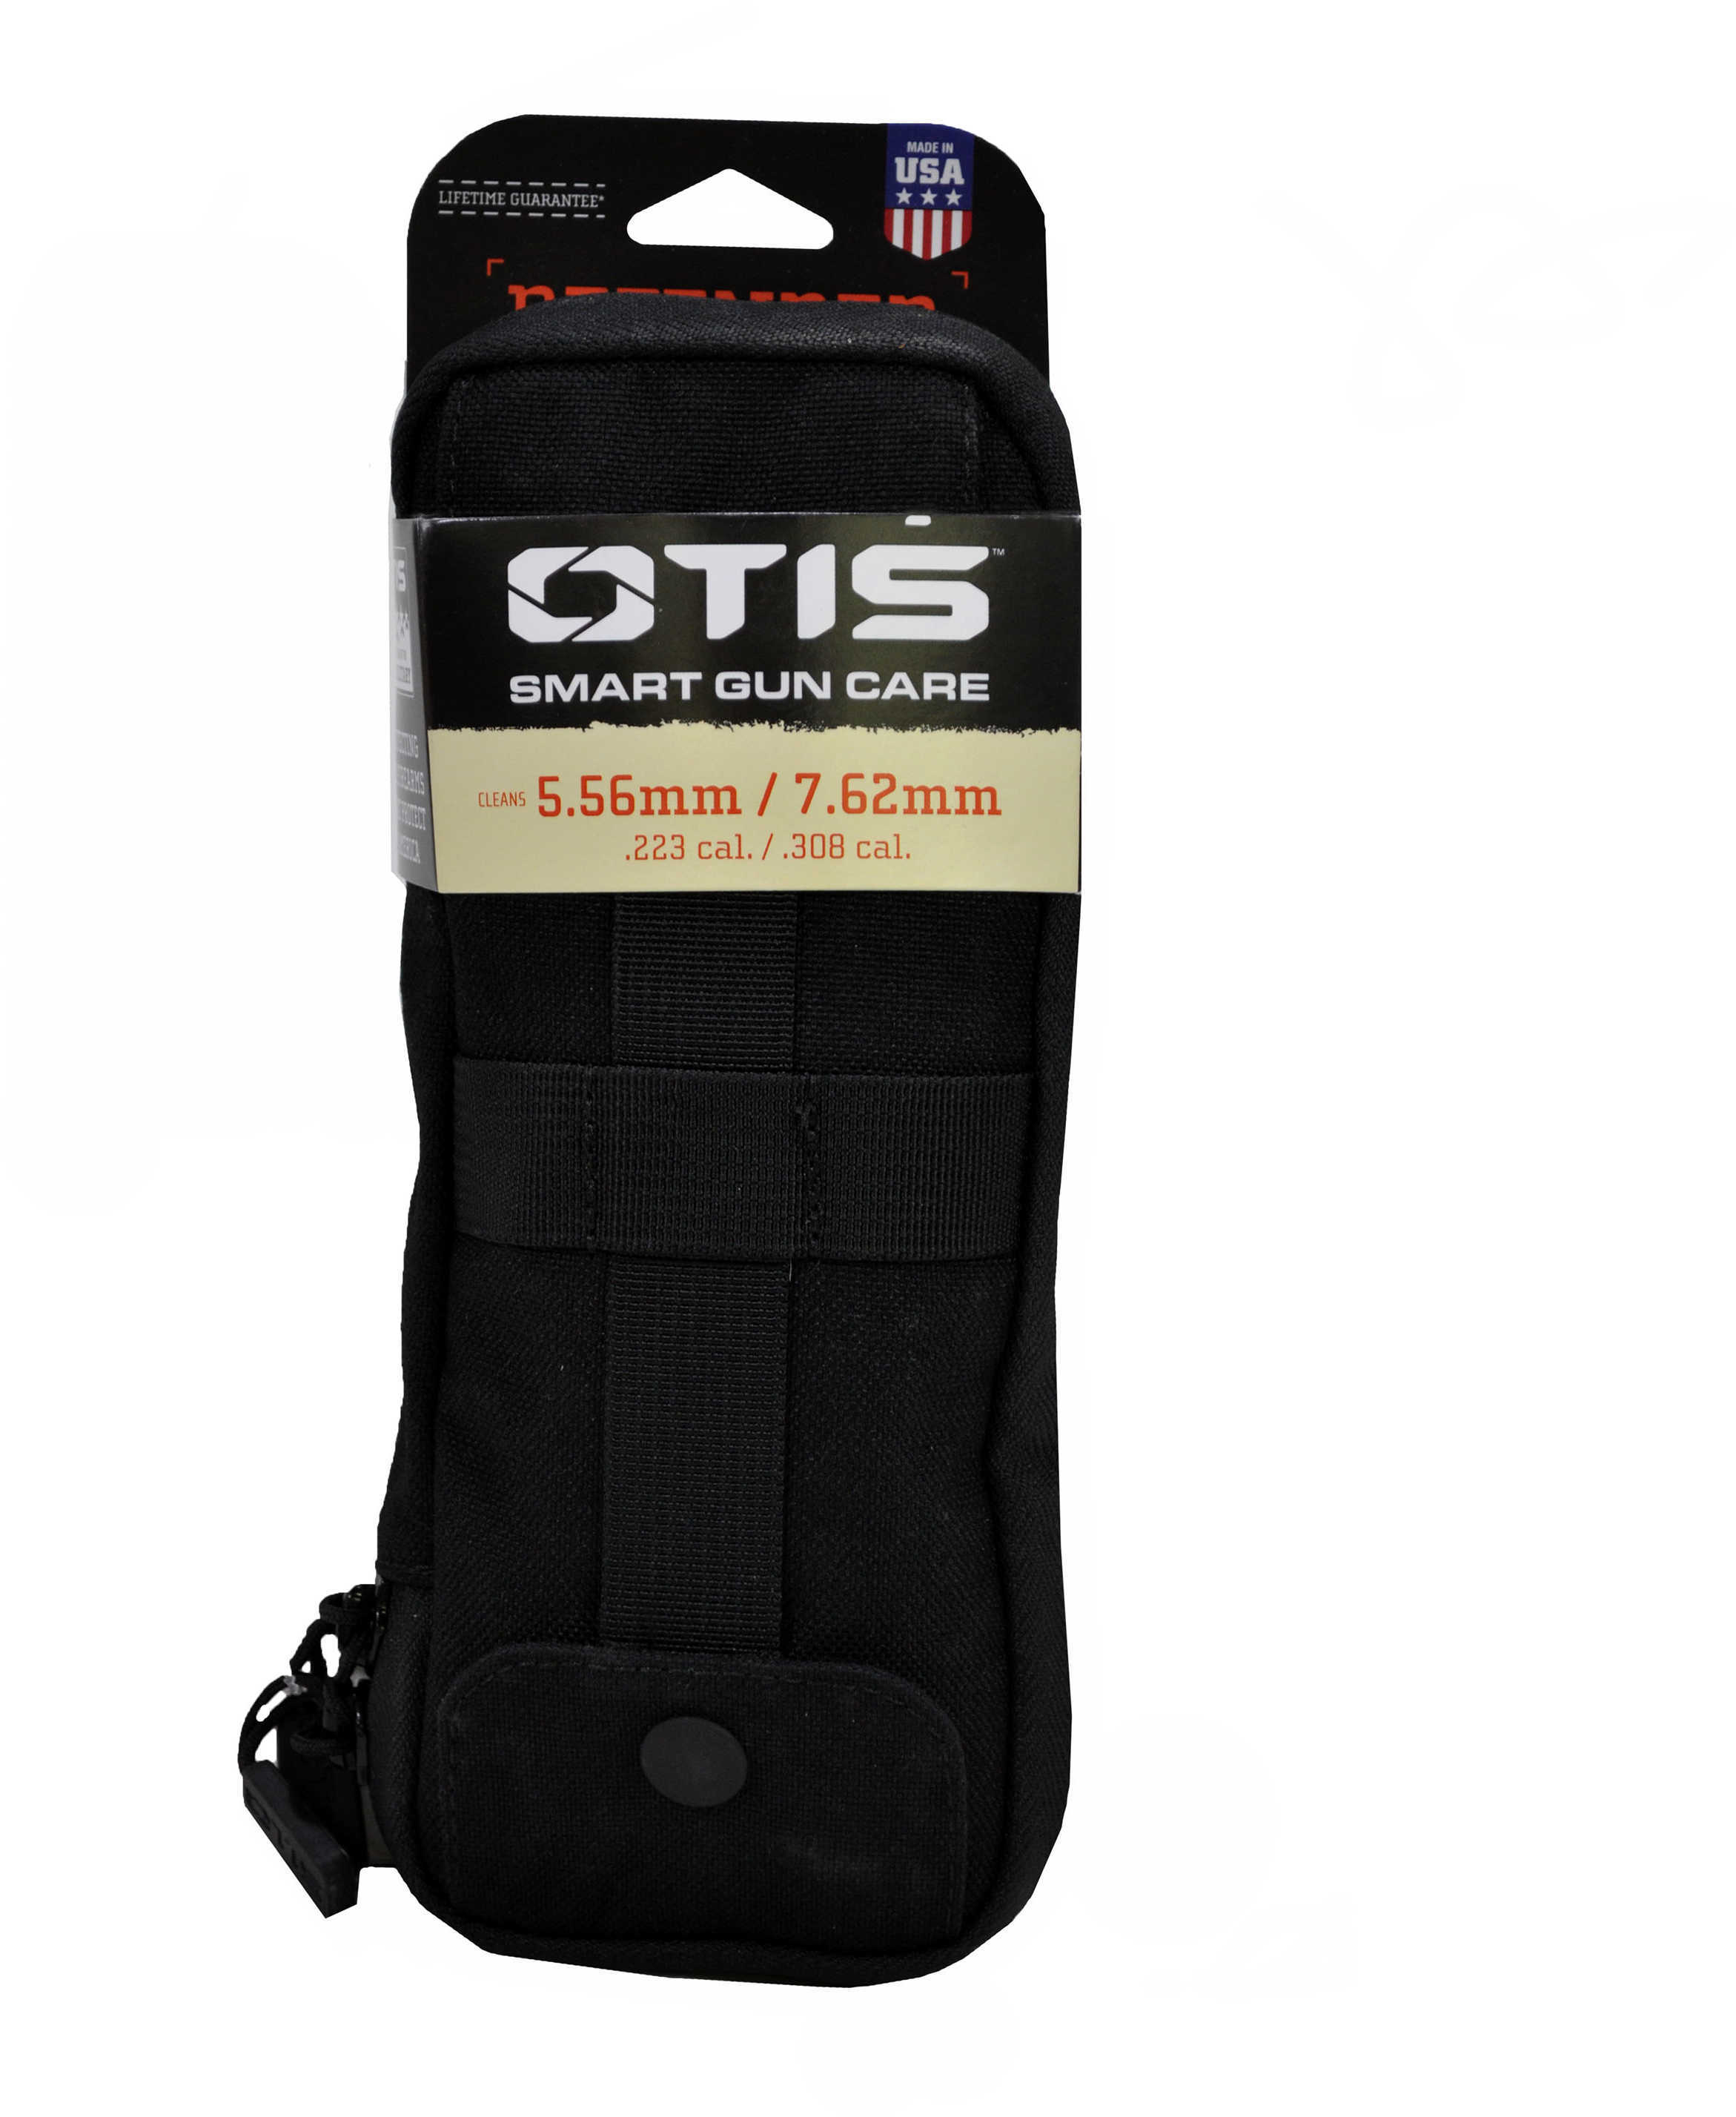 Otis Technologies Cleaning System Defender, 5.56mm/7.62mm Md: FG-901-5576